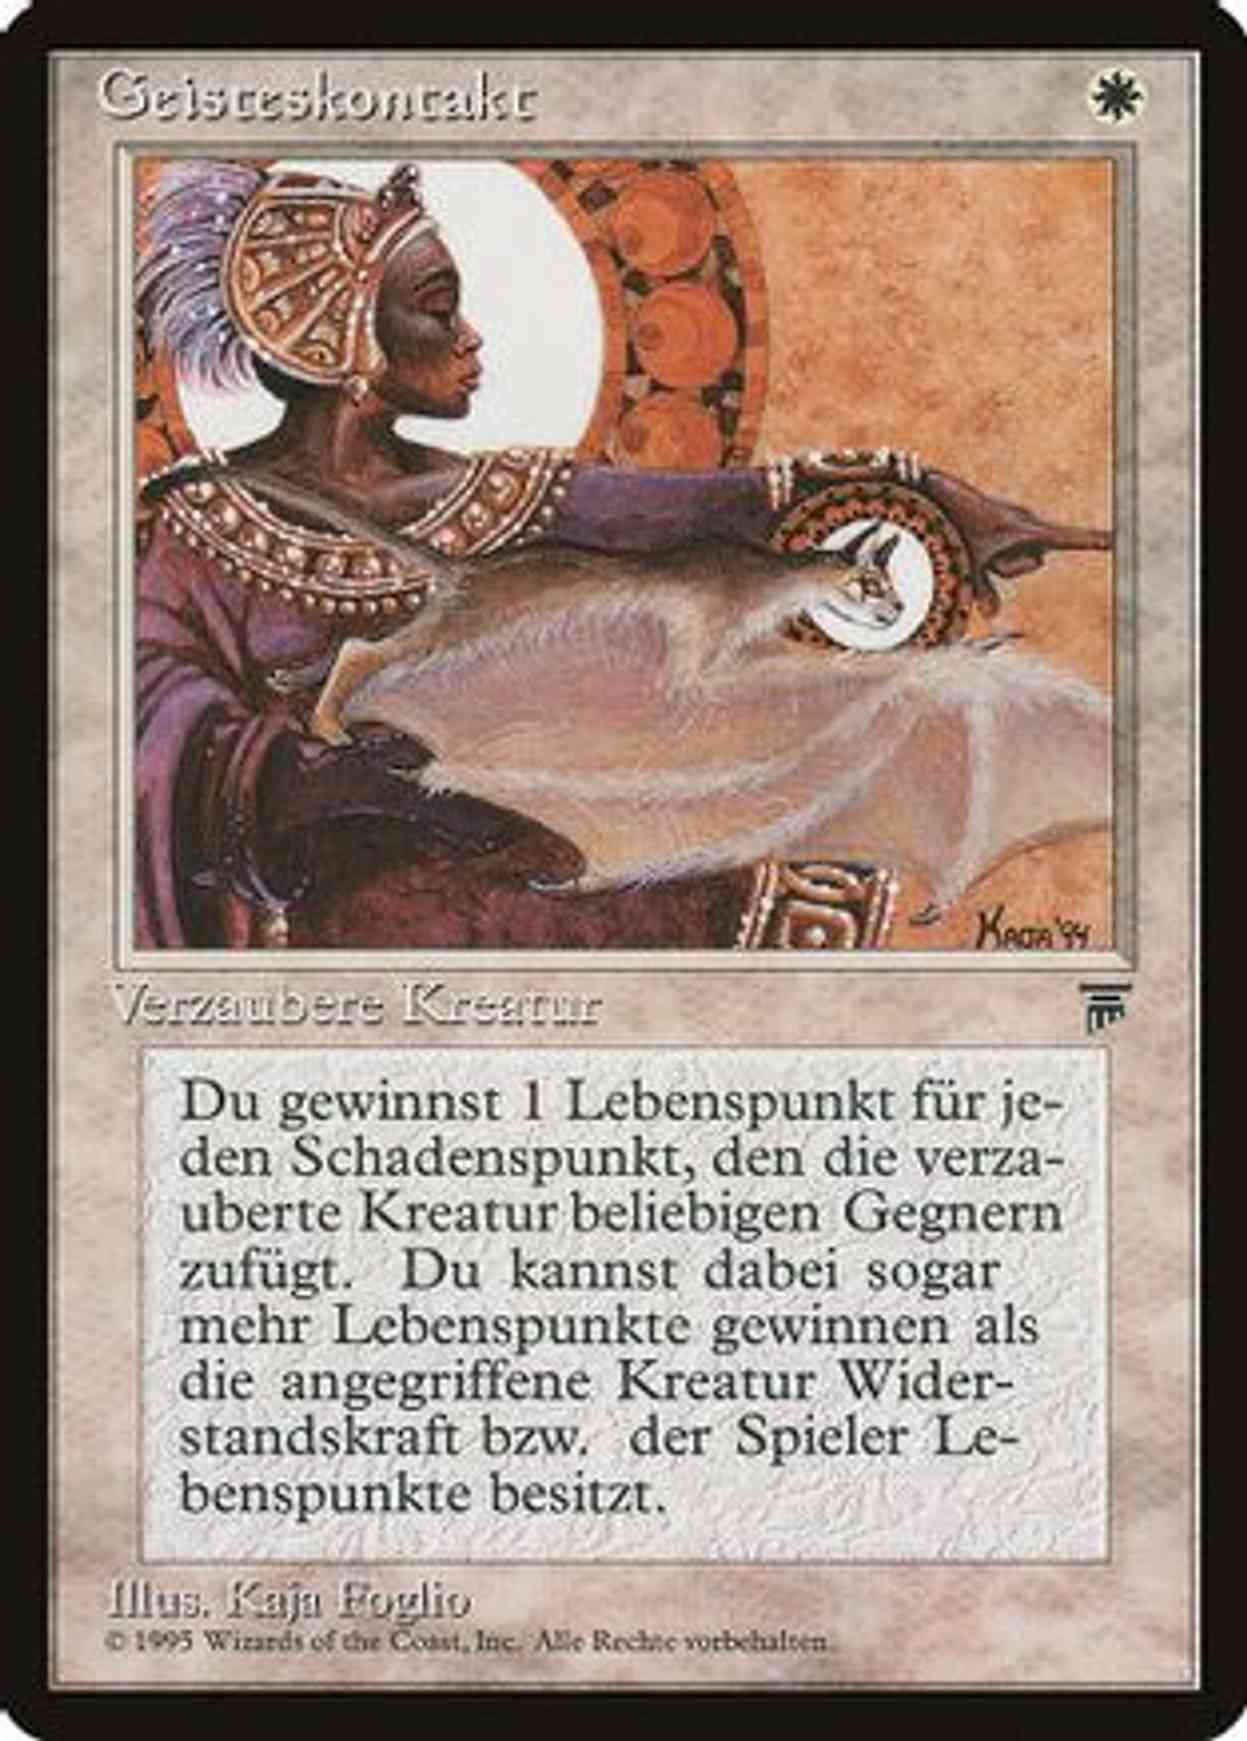 Spirit Link (German) - "Geisteskontakt" magic card front